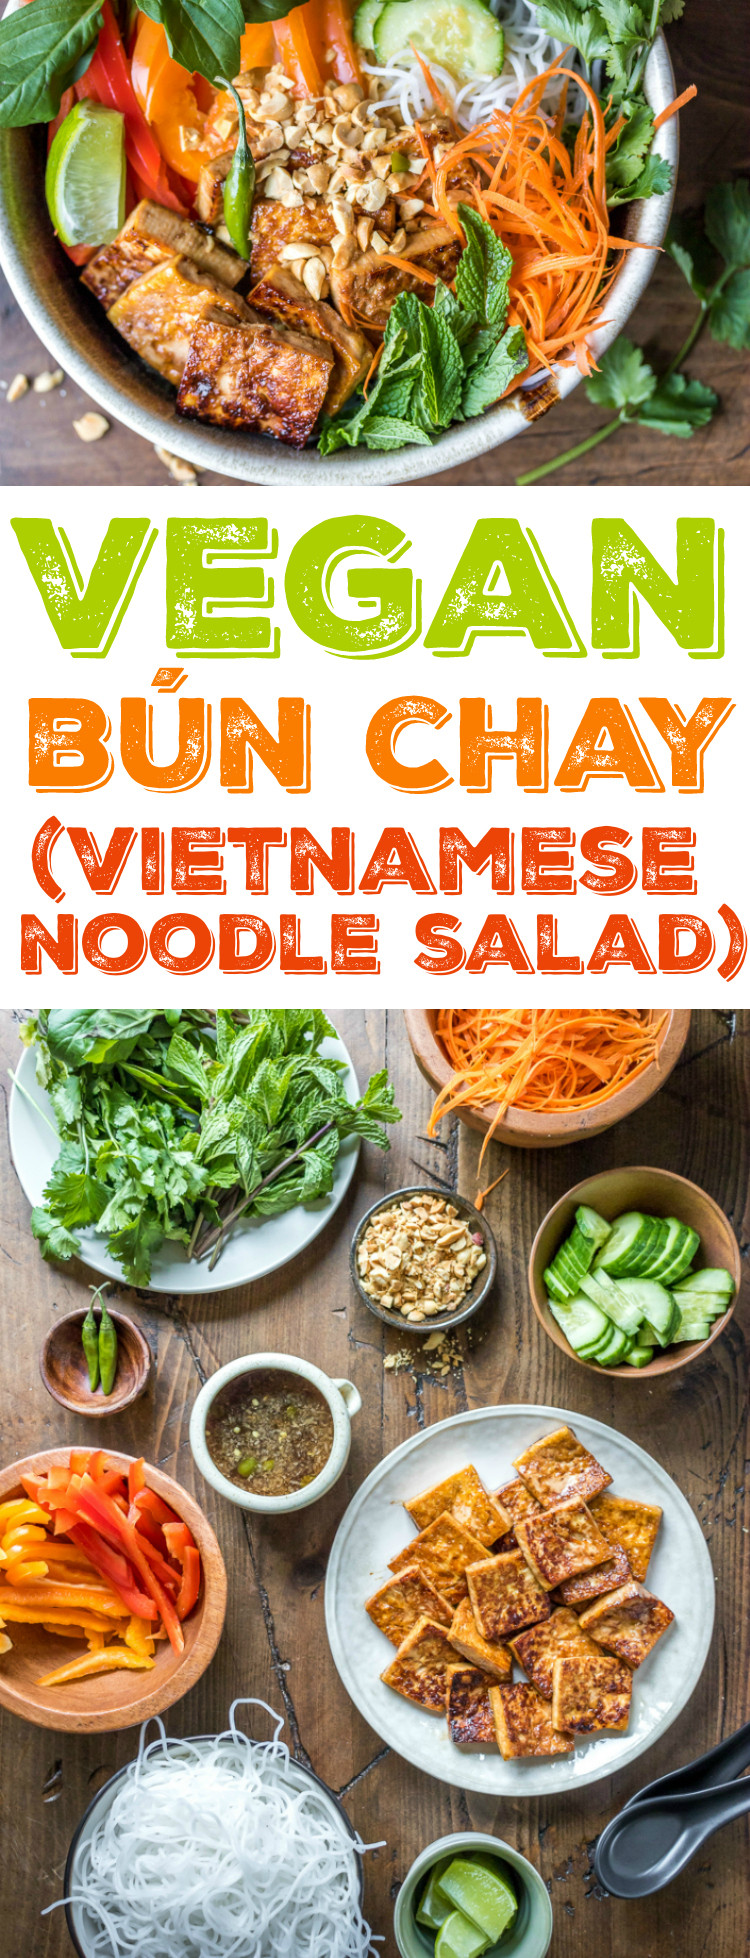 Vegan Bun Recipes
 Vegan Bún Chay Vietnamese Noodle Salad The Wanderlust